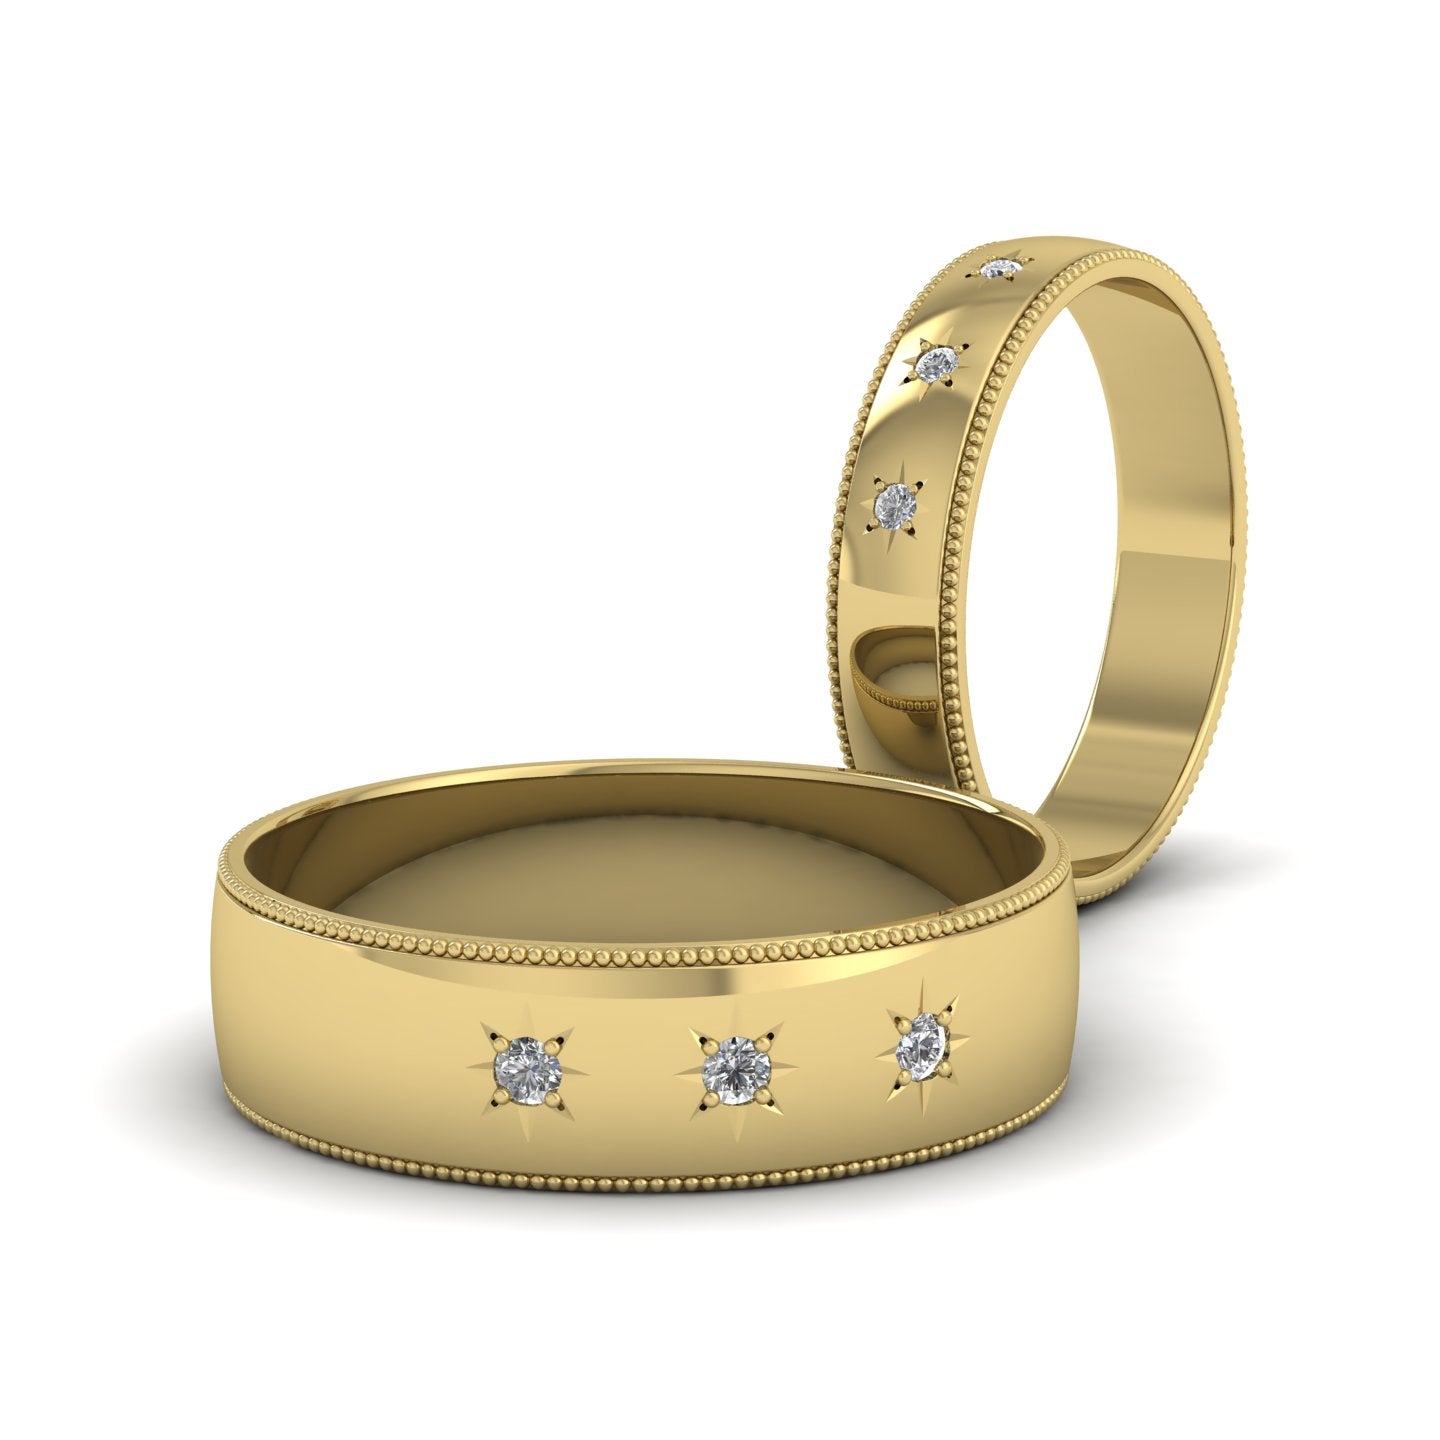 Millgrained Edge And Three Star Diamond Set 9ct Yellow Gold 6mm Wedding Ring